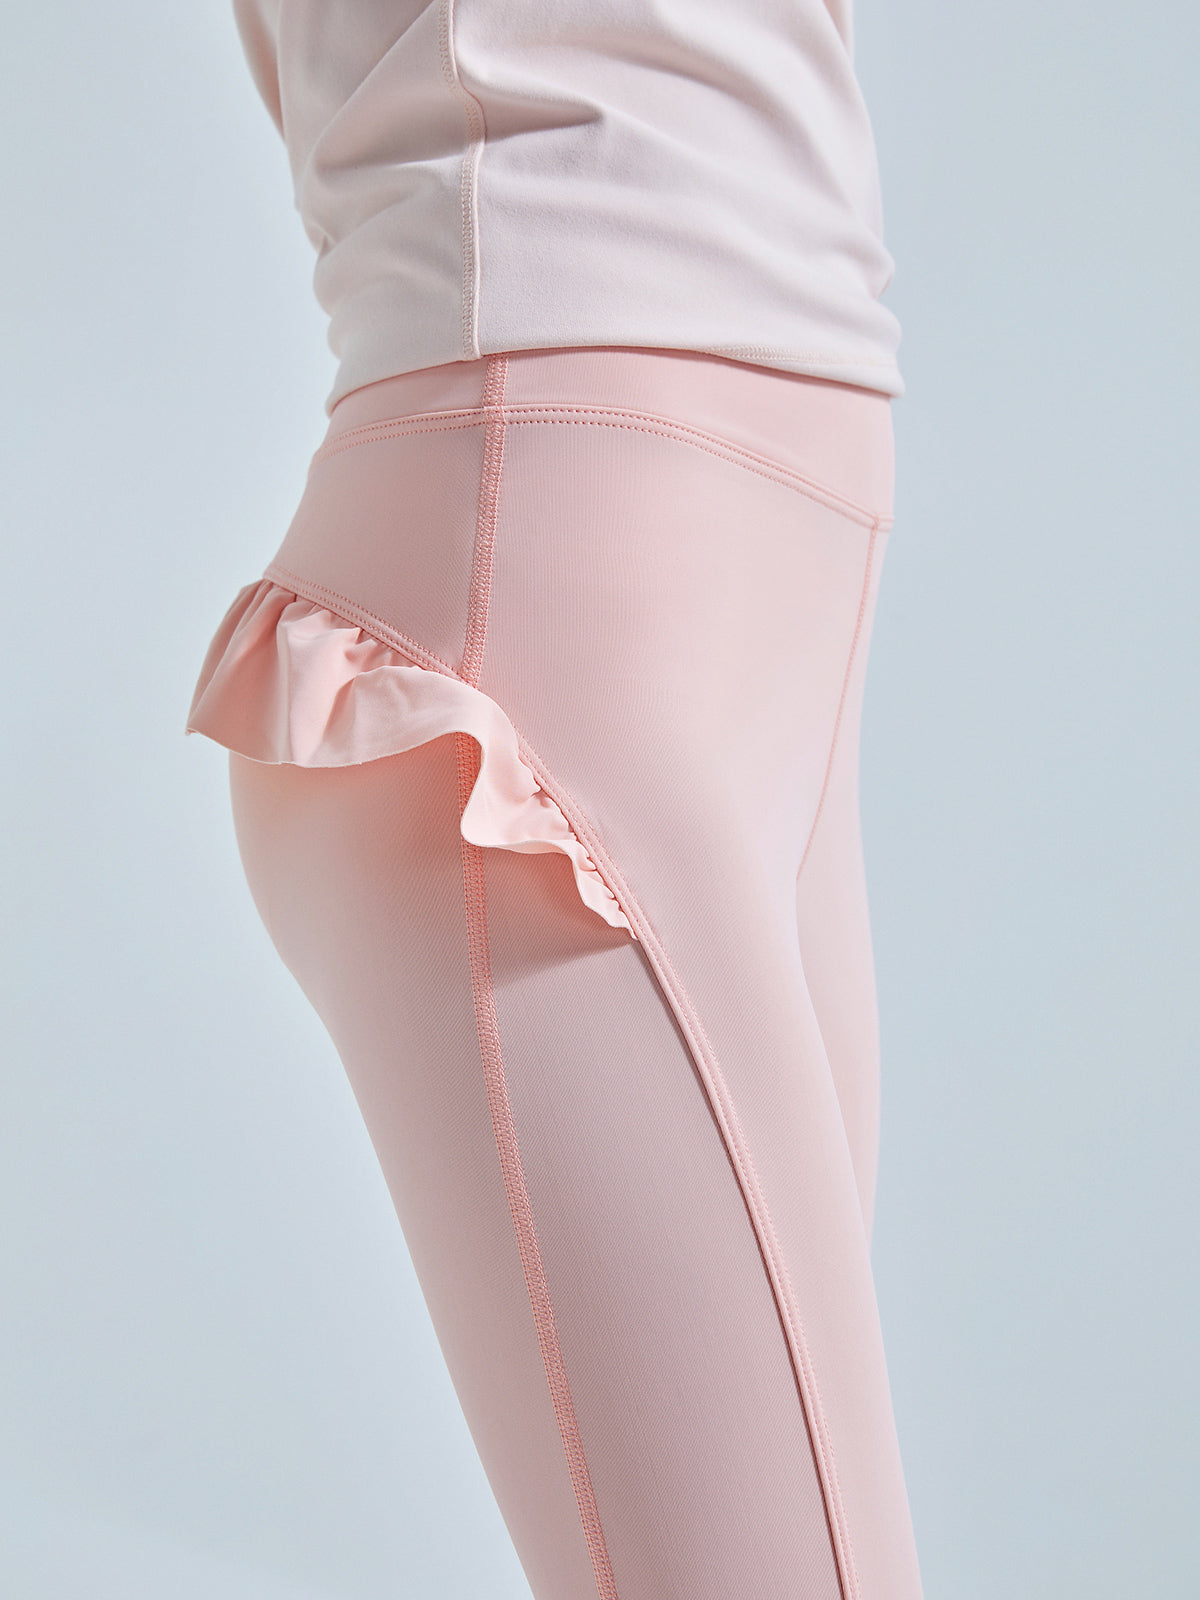 Girls Soft Cotton Ruffle Leggings | Hot Pink